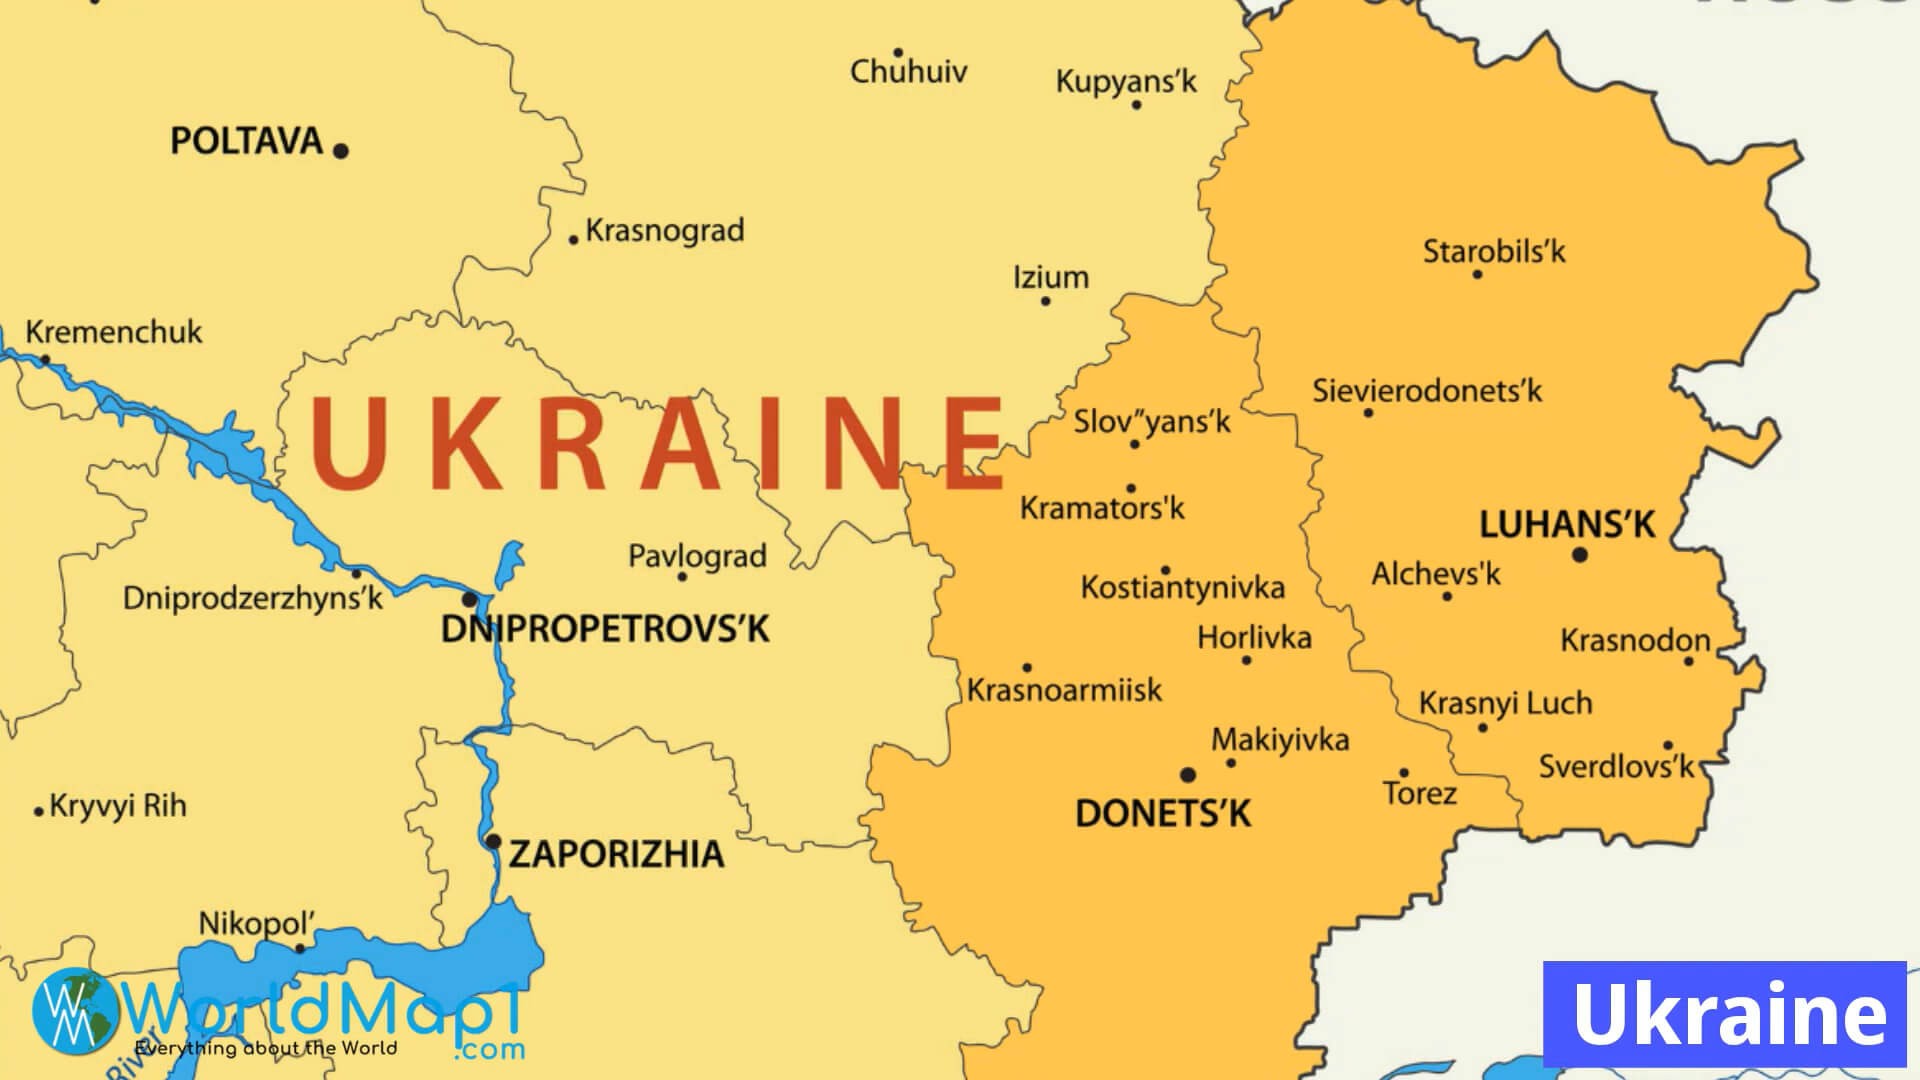 Ukraine and Donbas Region Border Map